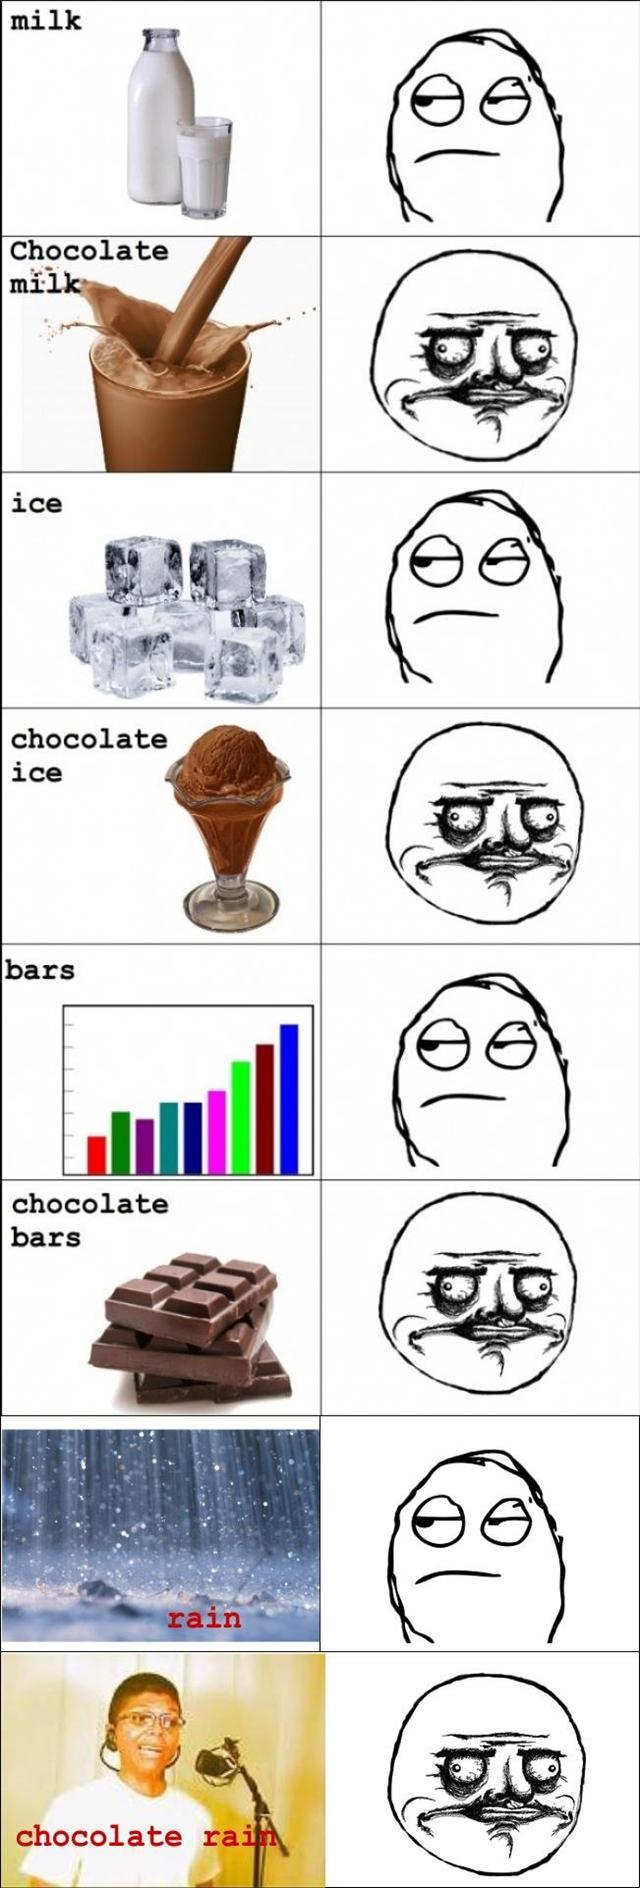 Adding chocolate makes everything better - meme